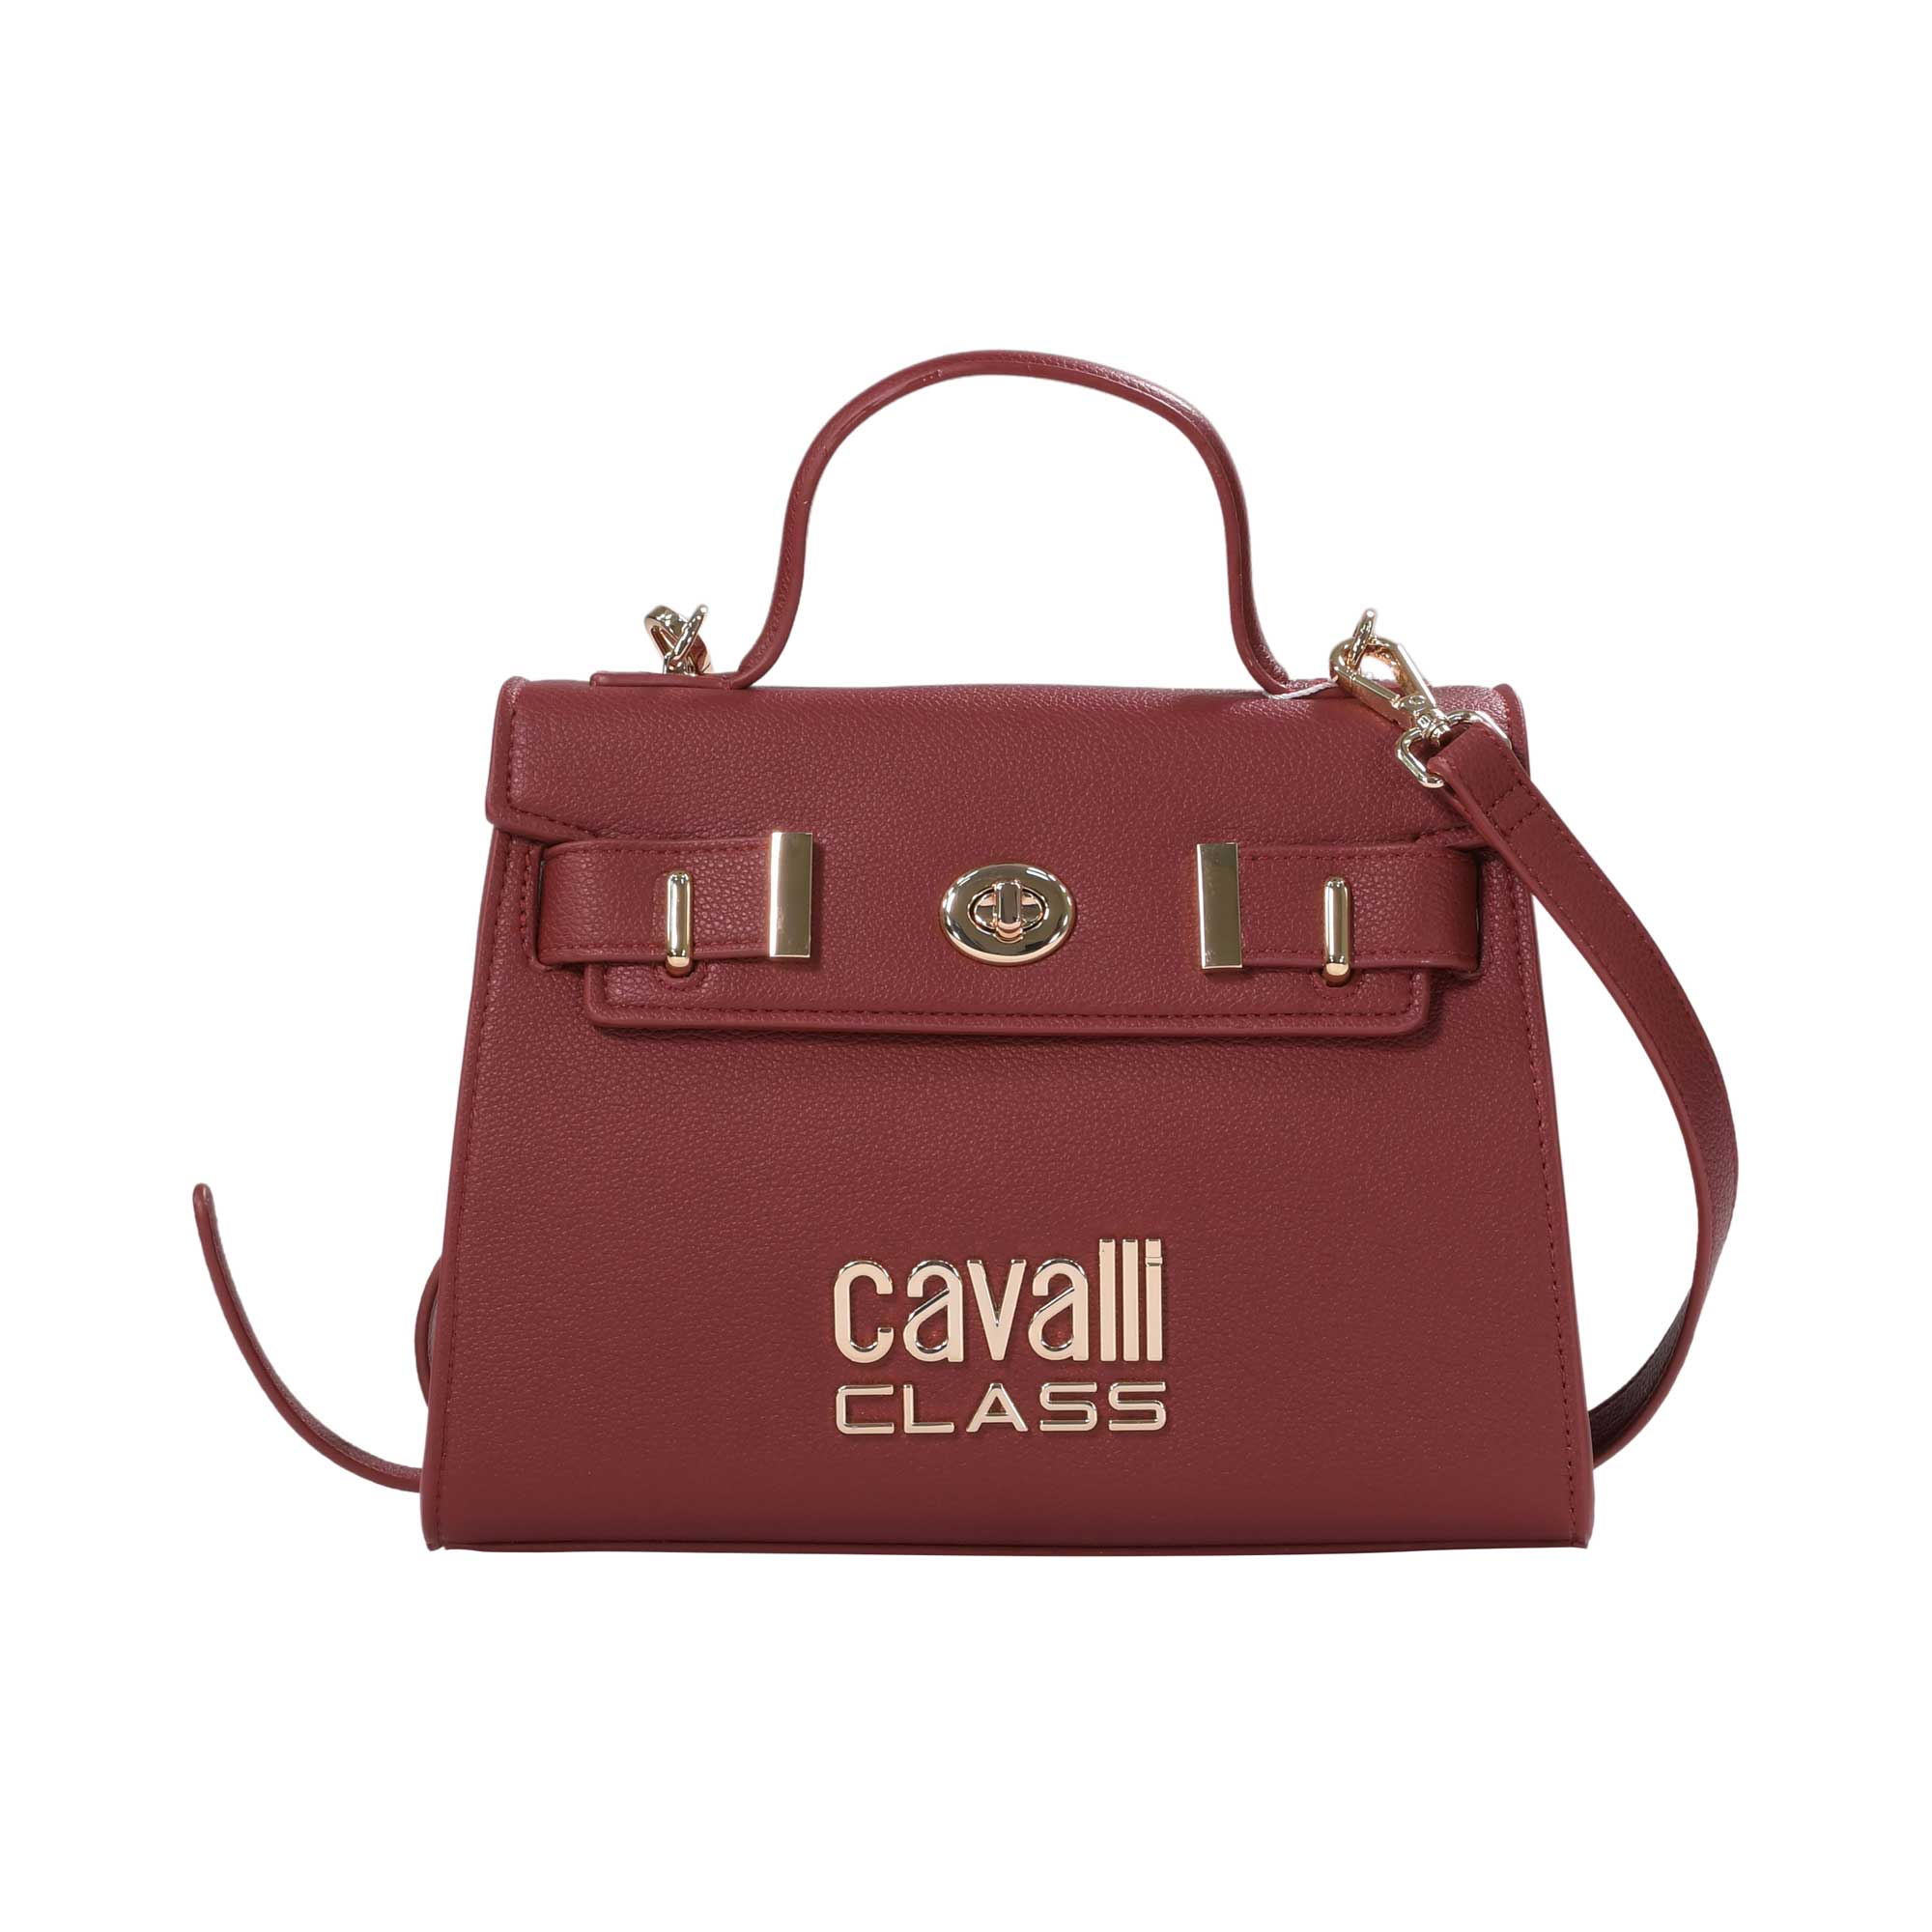 Cavalli Class Women's Burgundy Top Handle Handbag